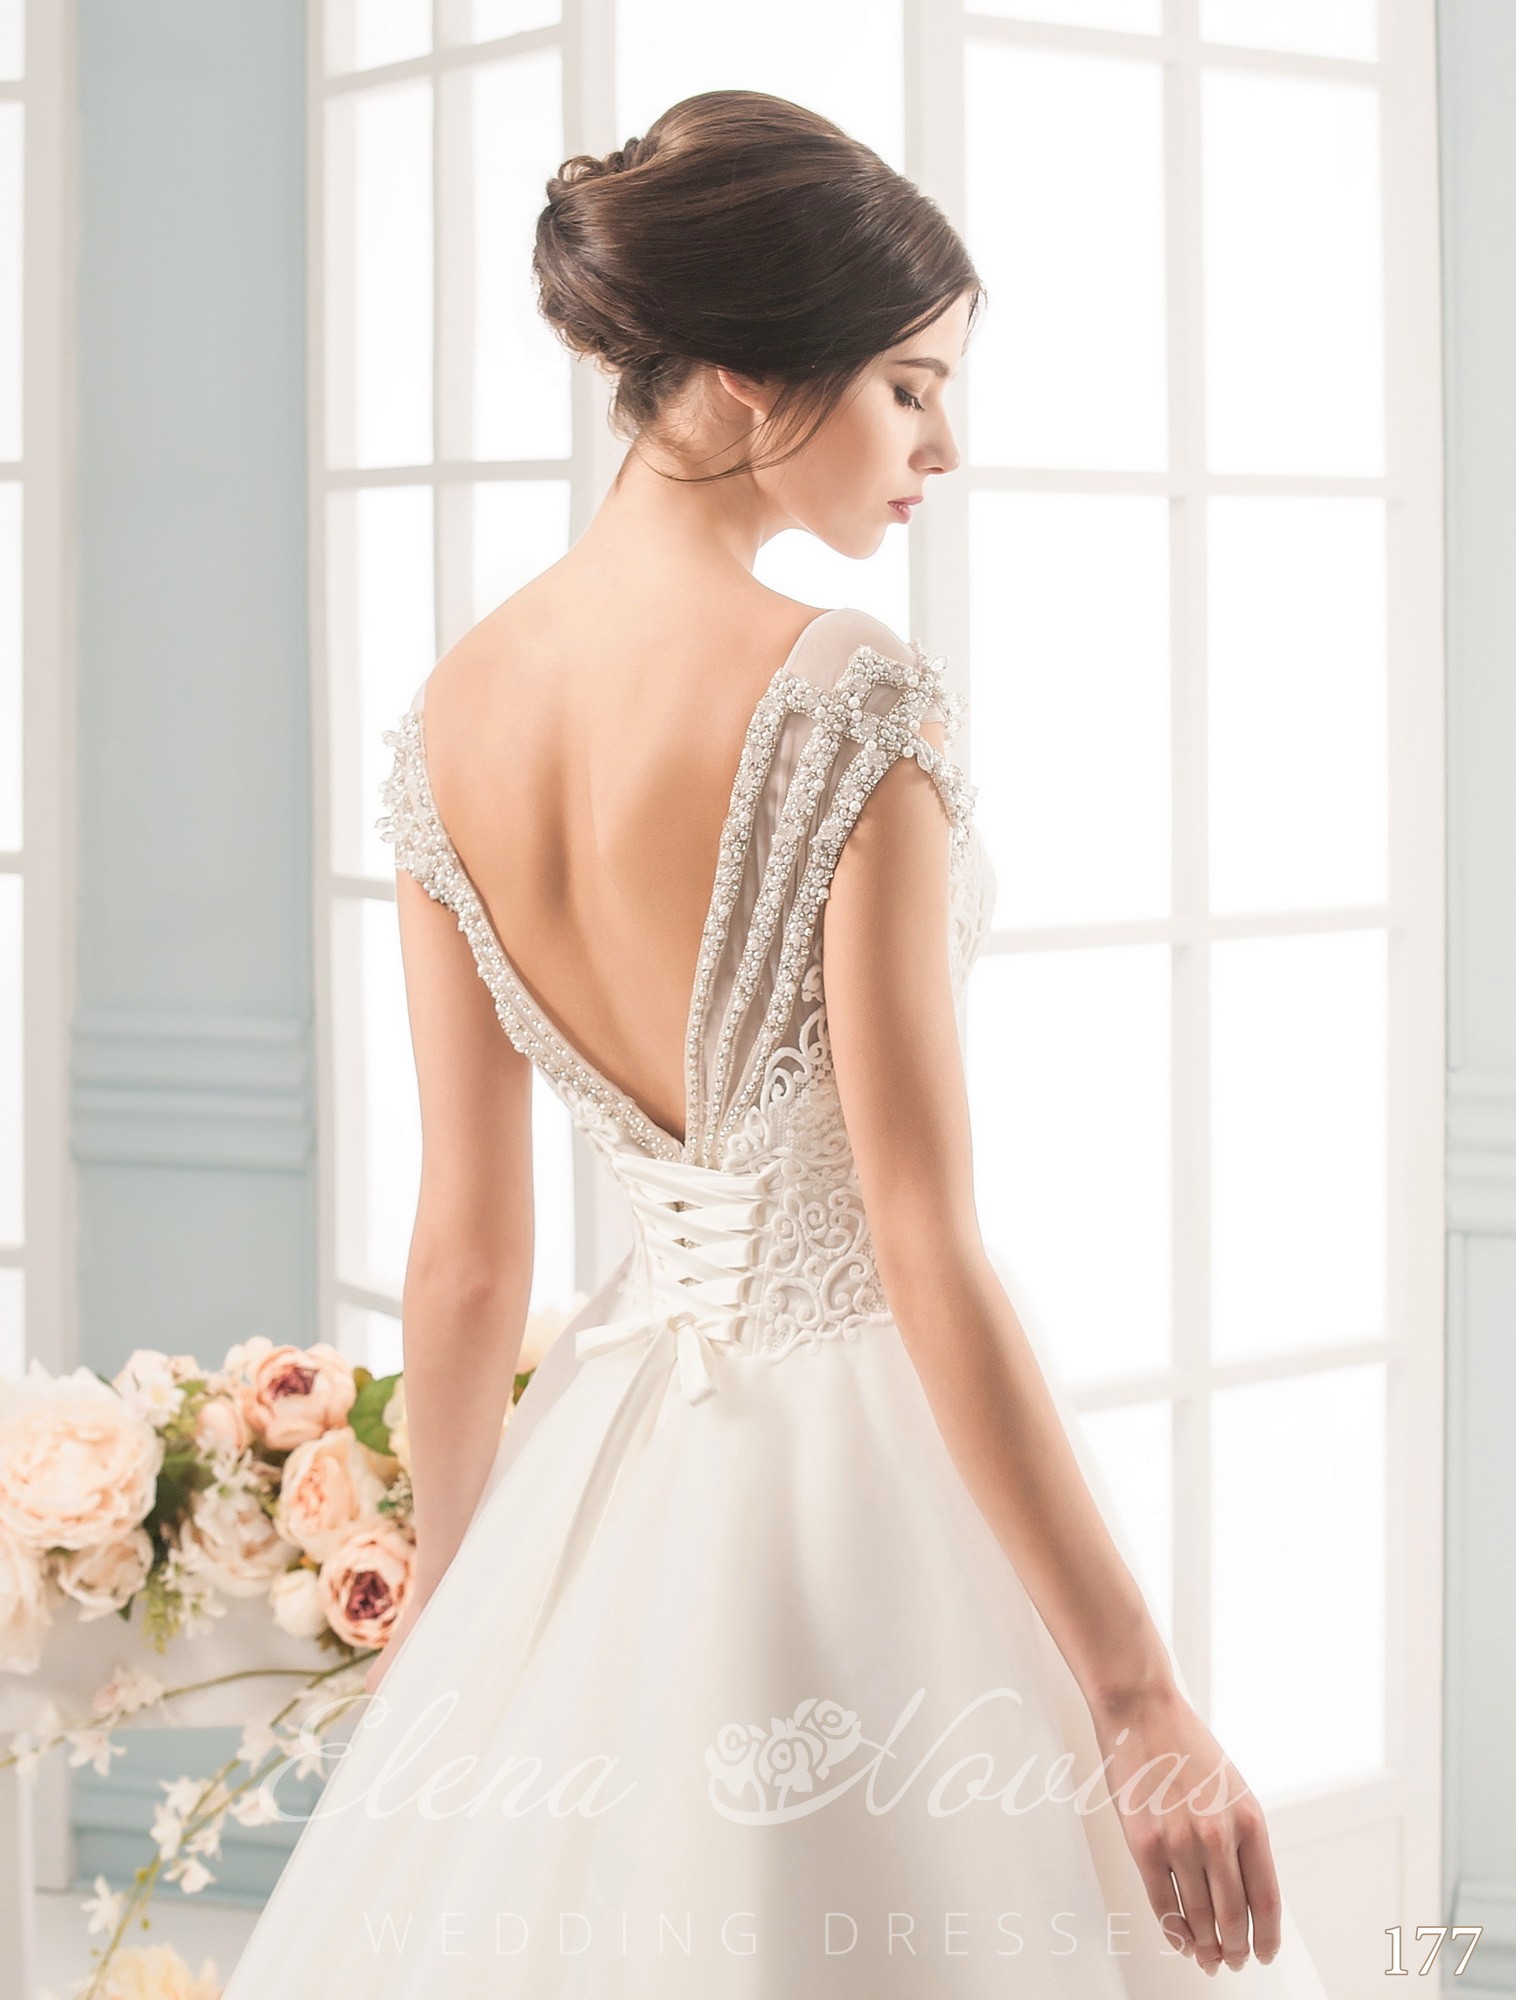 Wedding dress wholesale 177